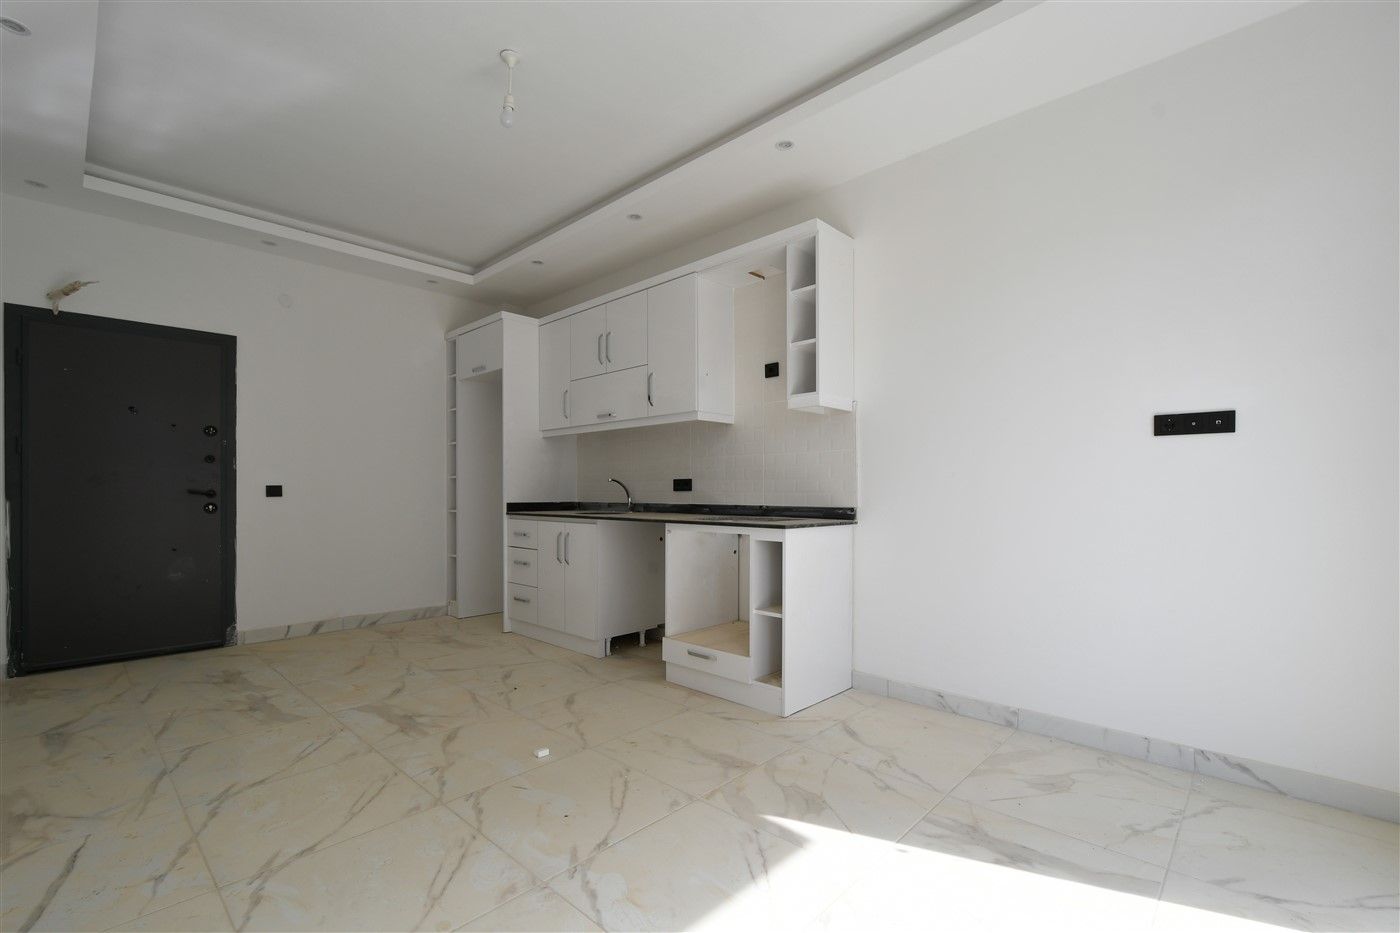 New 1-bedroom apartment in Avsallar - Alanya